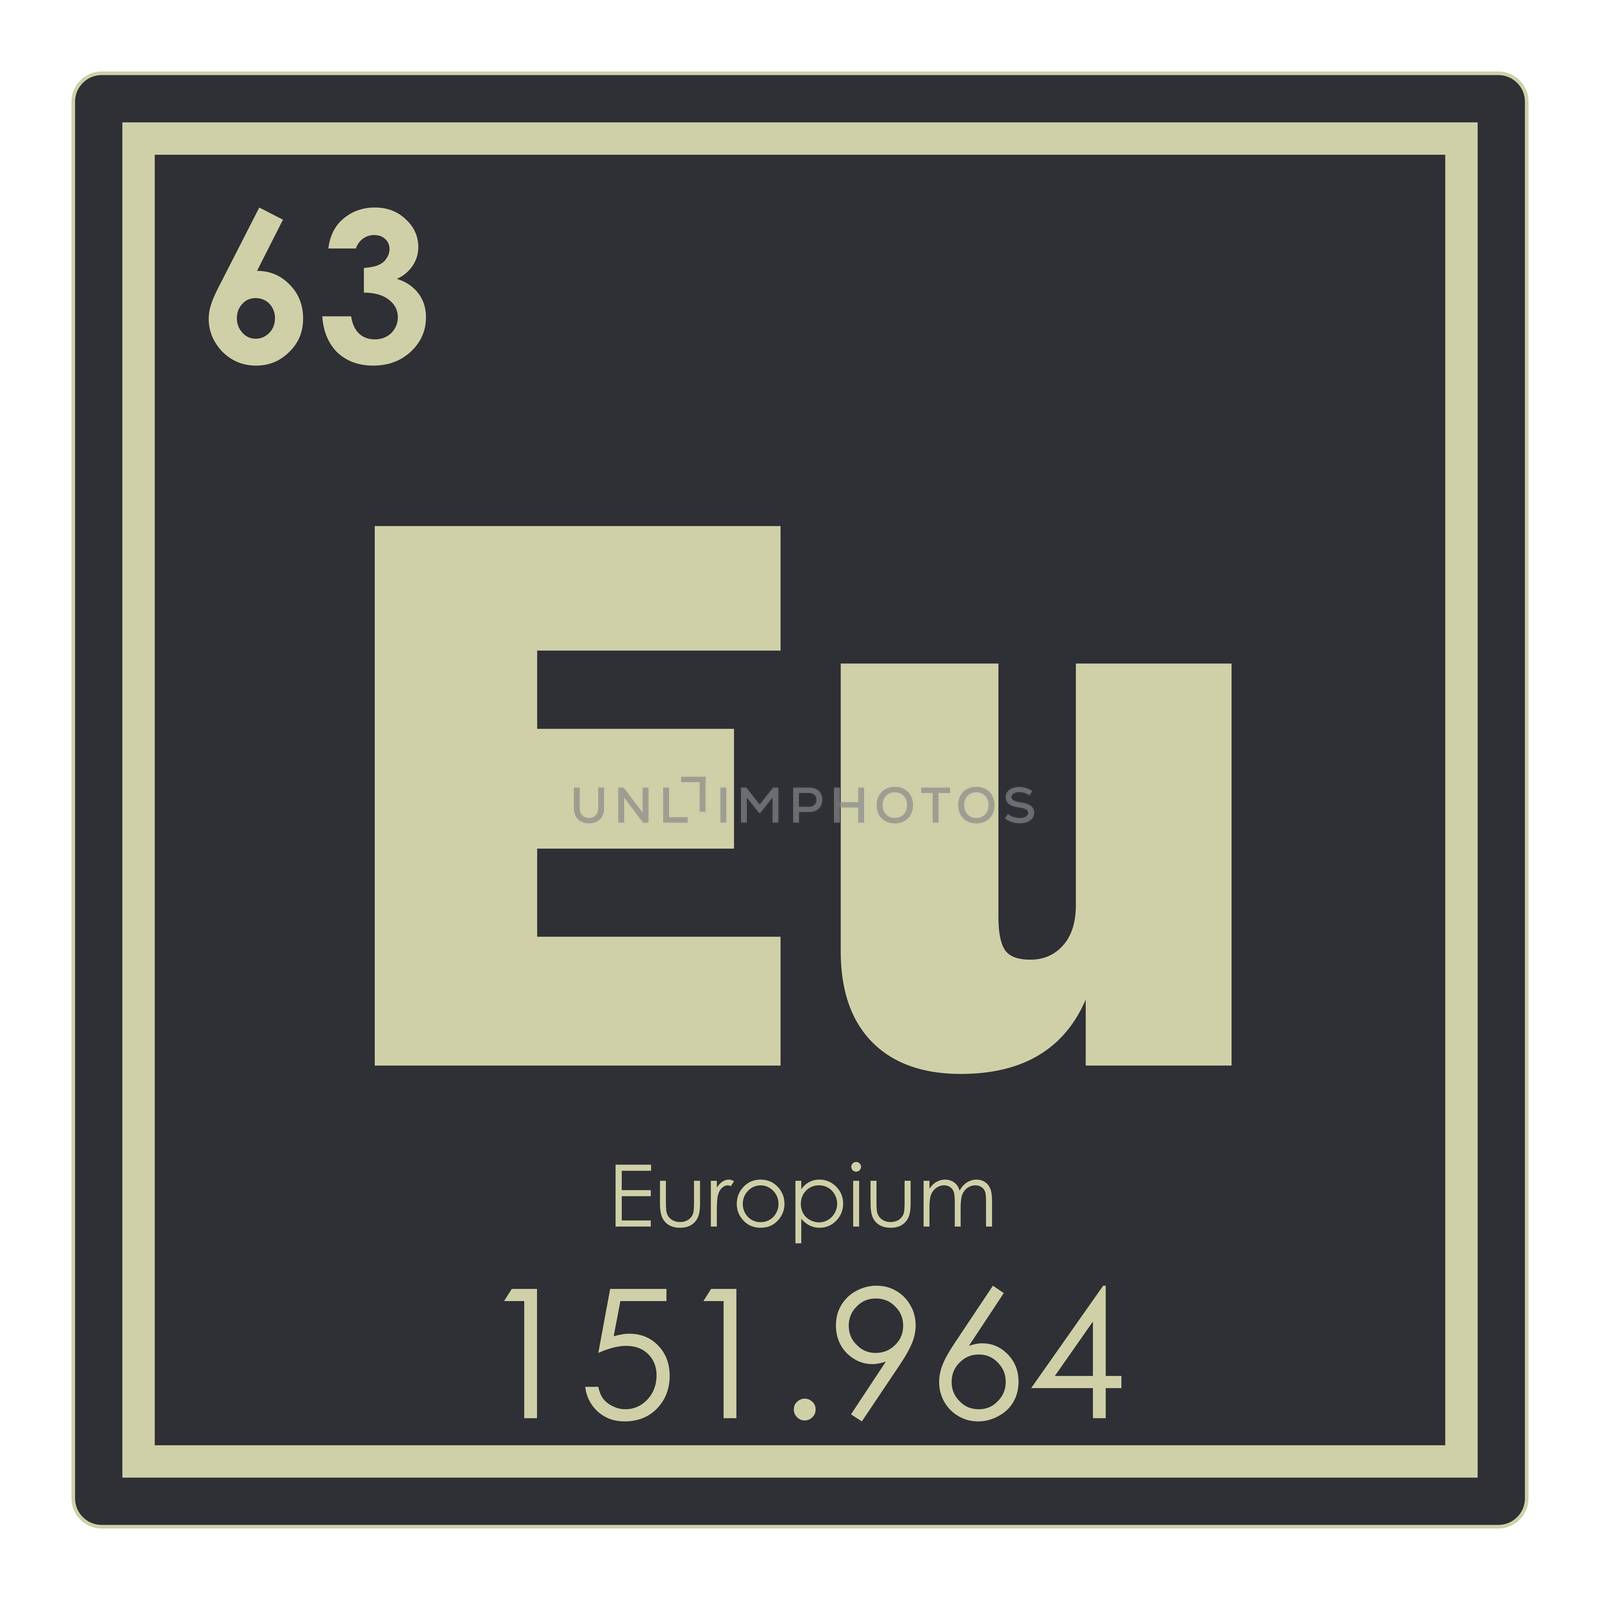 Europium chemical element by tony4urban